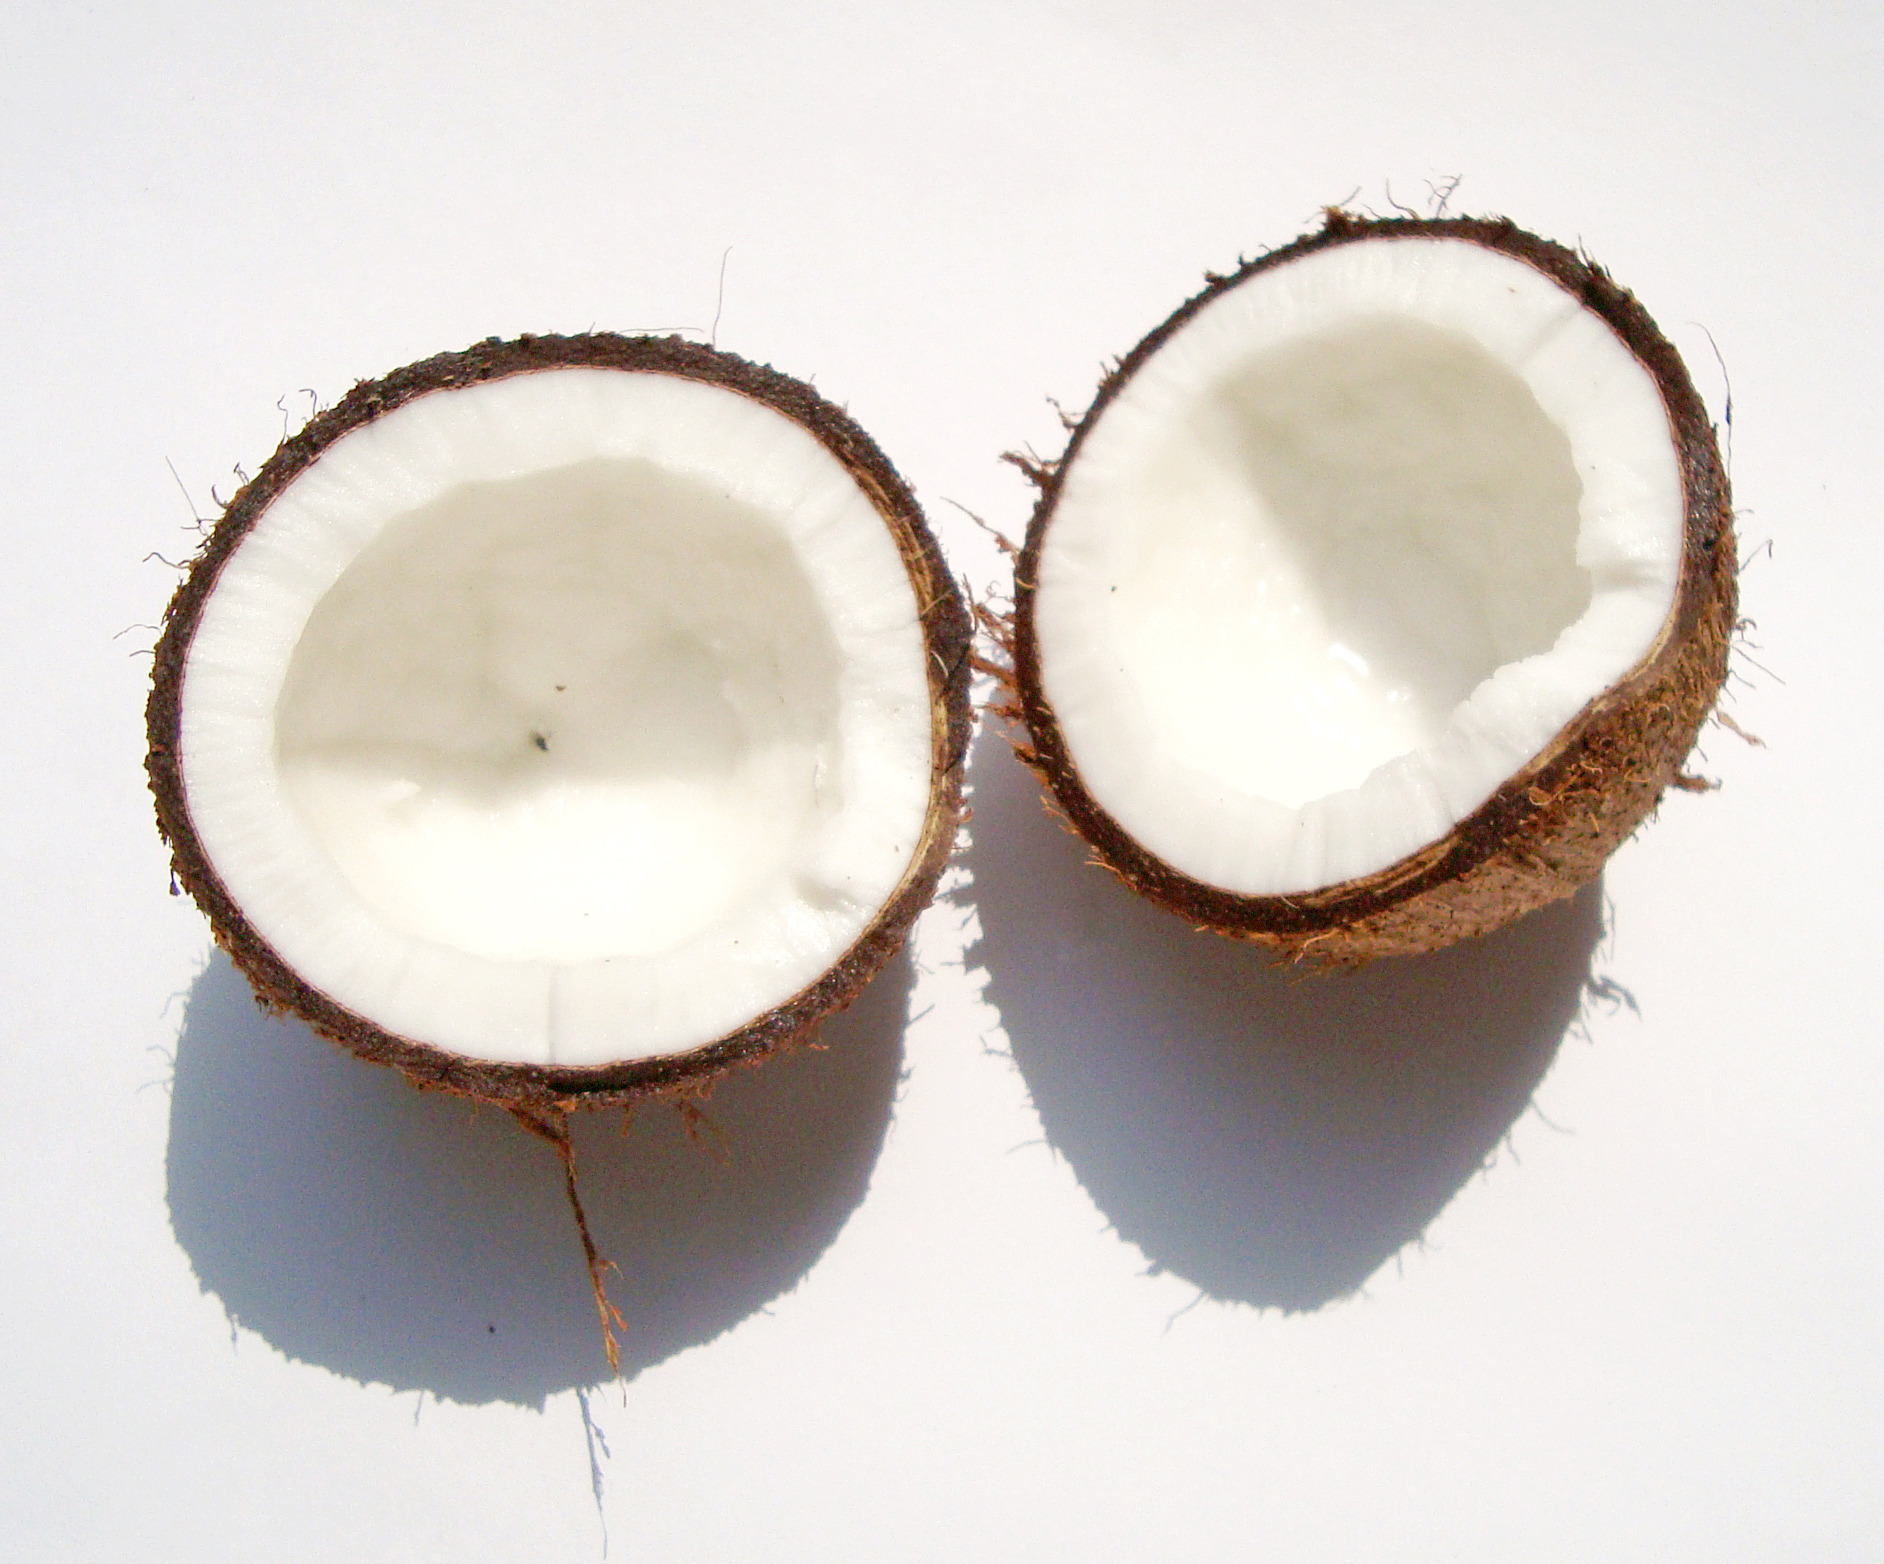 Coconut oil is a great vegan alternative for lard.